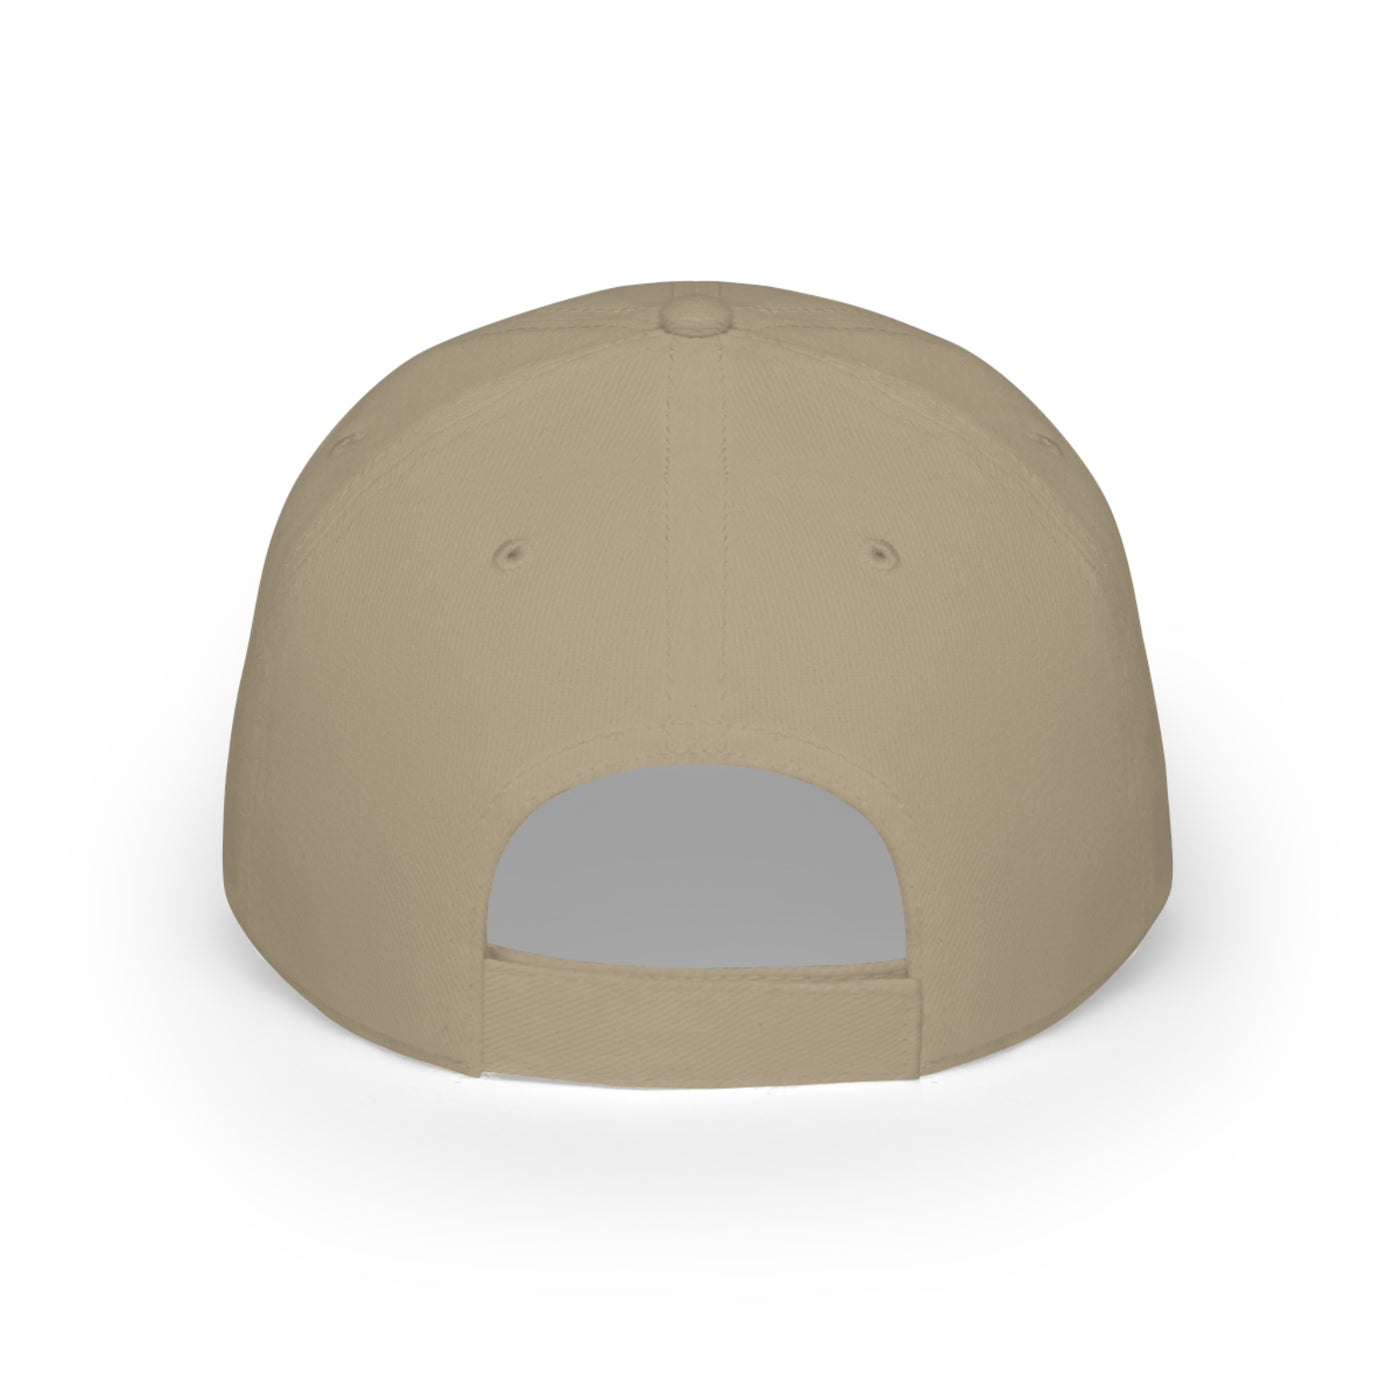 Low Profile Baseball Cap | 6 Panel Hat | Let's Travel